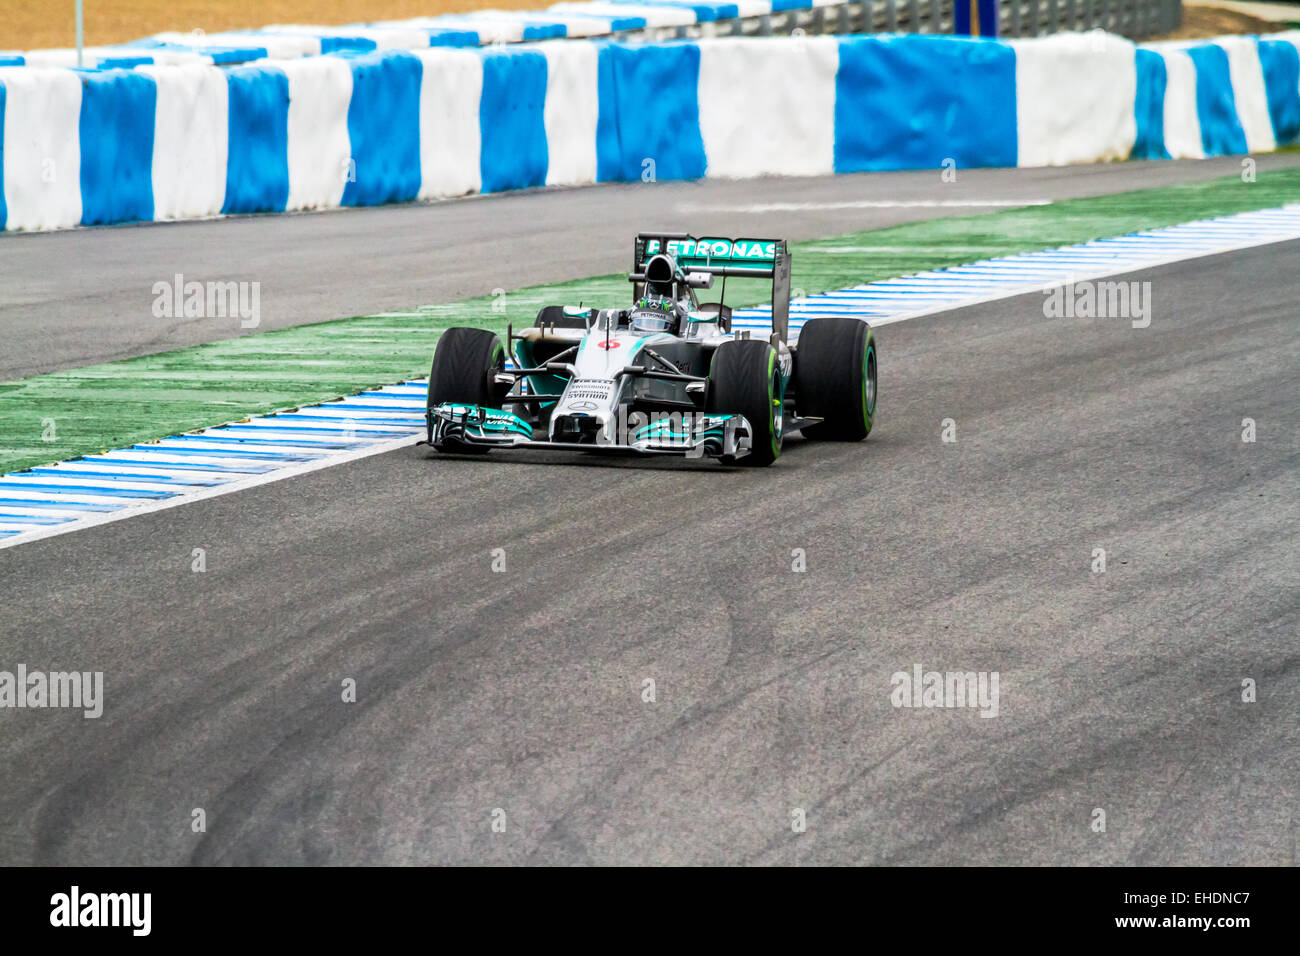 JEREZ DE LA FRONTERA, SPAIN - JAN 31: Nico Rosberg of Mercedes F1 races on training session on January 31 , 2014 Stock Photo